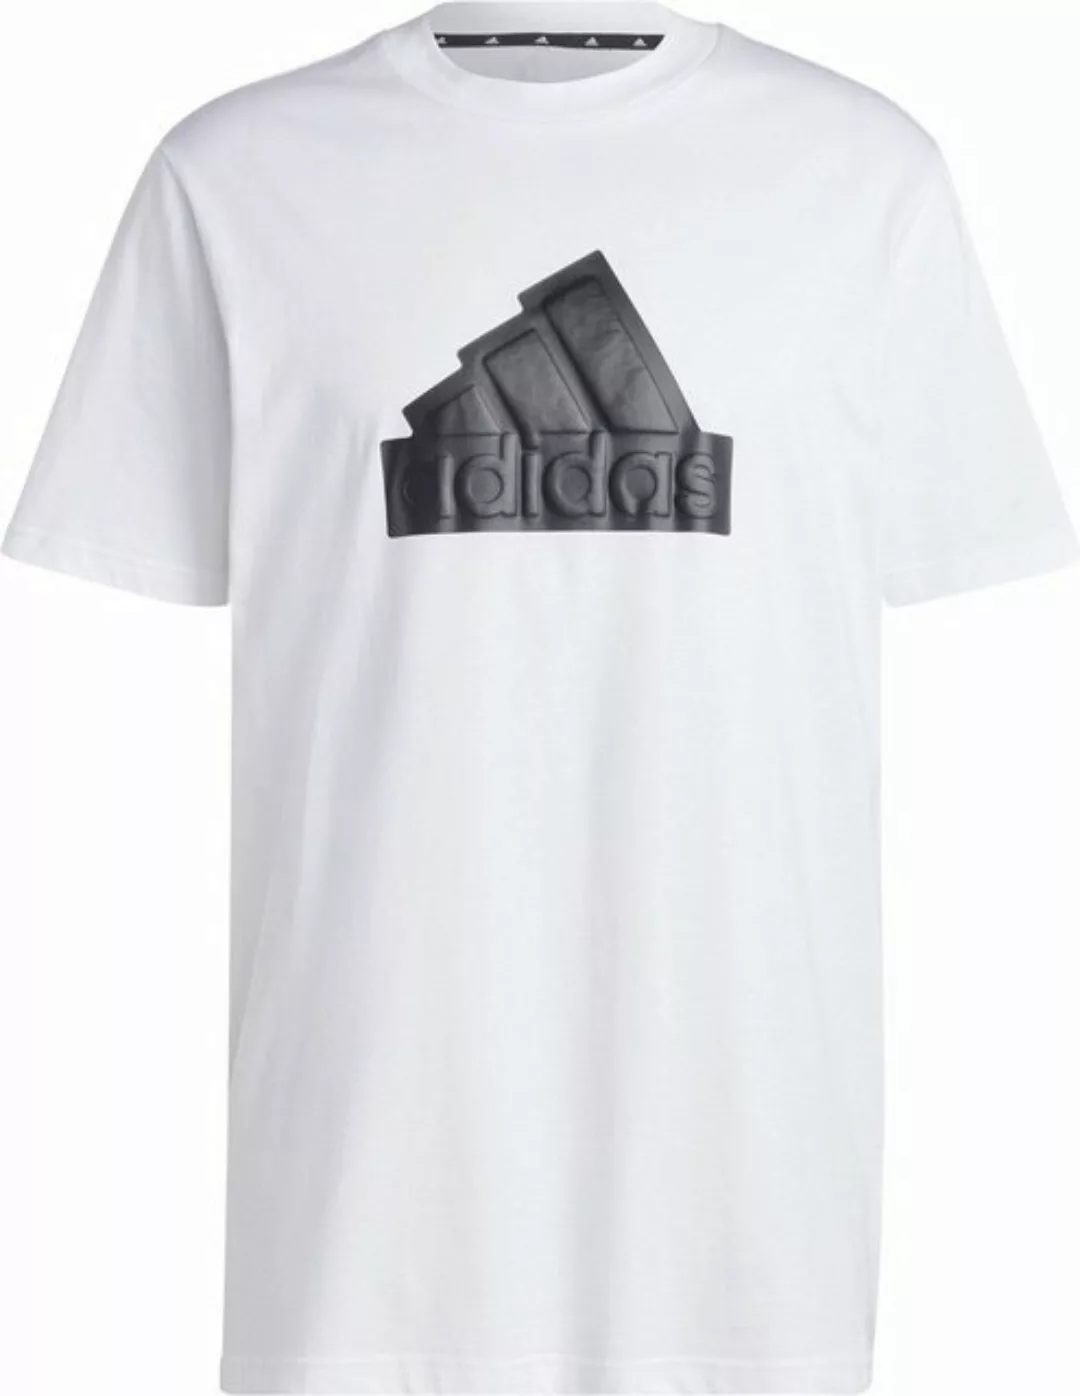 adidas Performance T-Shirt M FI BOS T WHITE günstig online kaufen